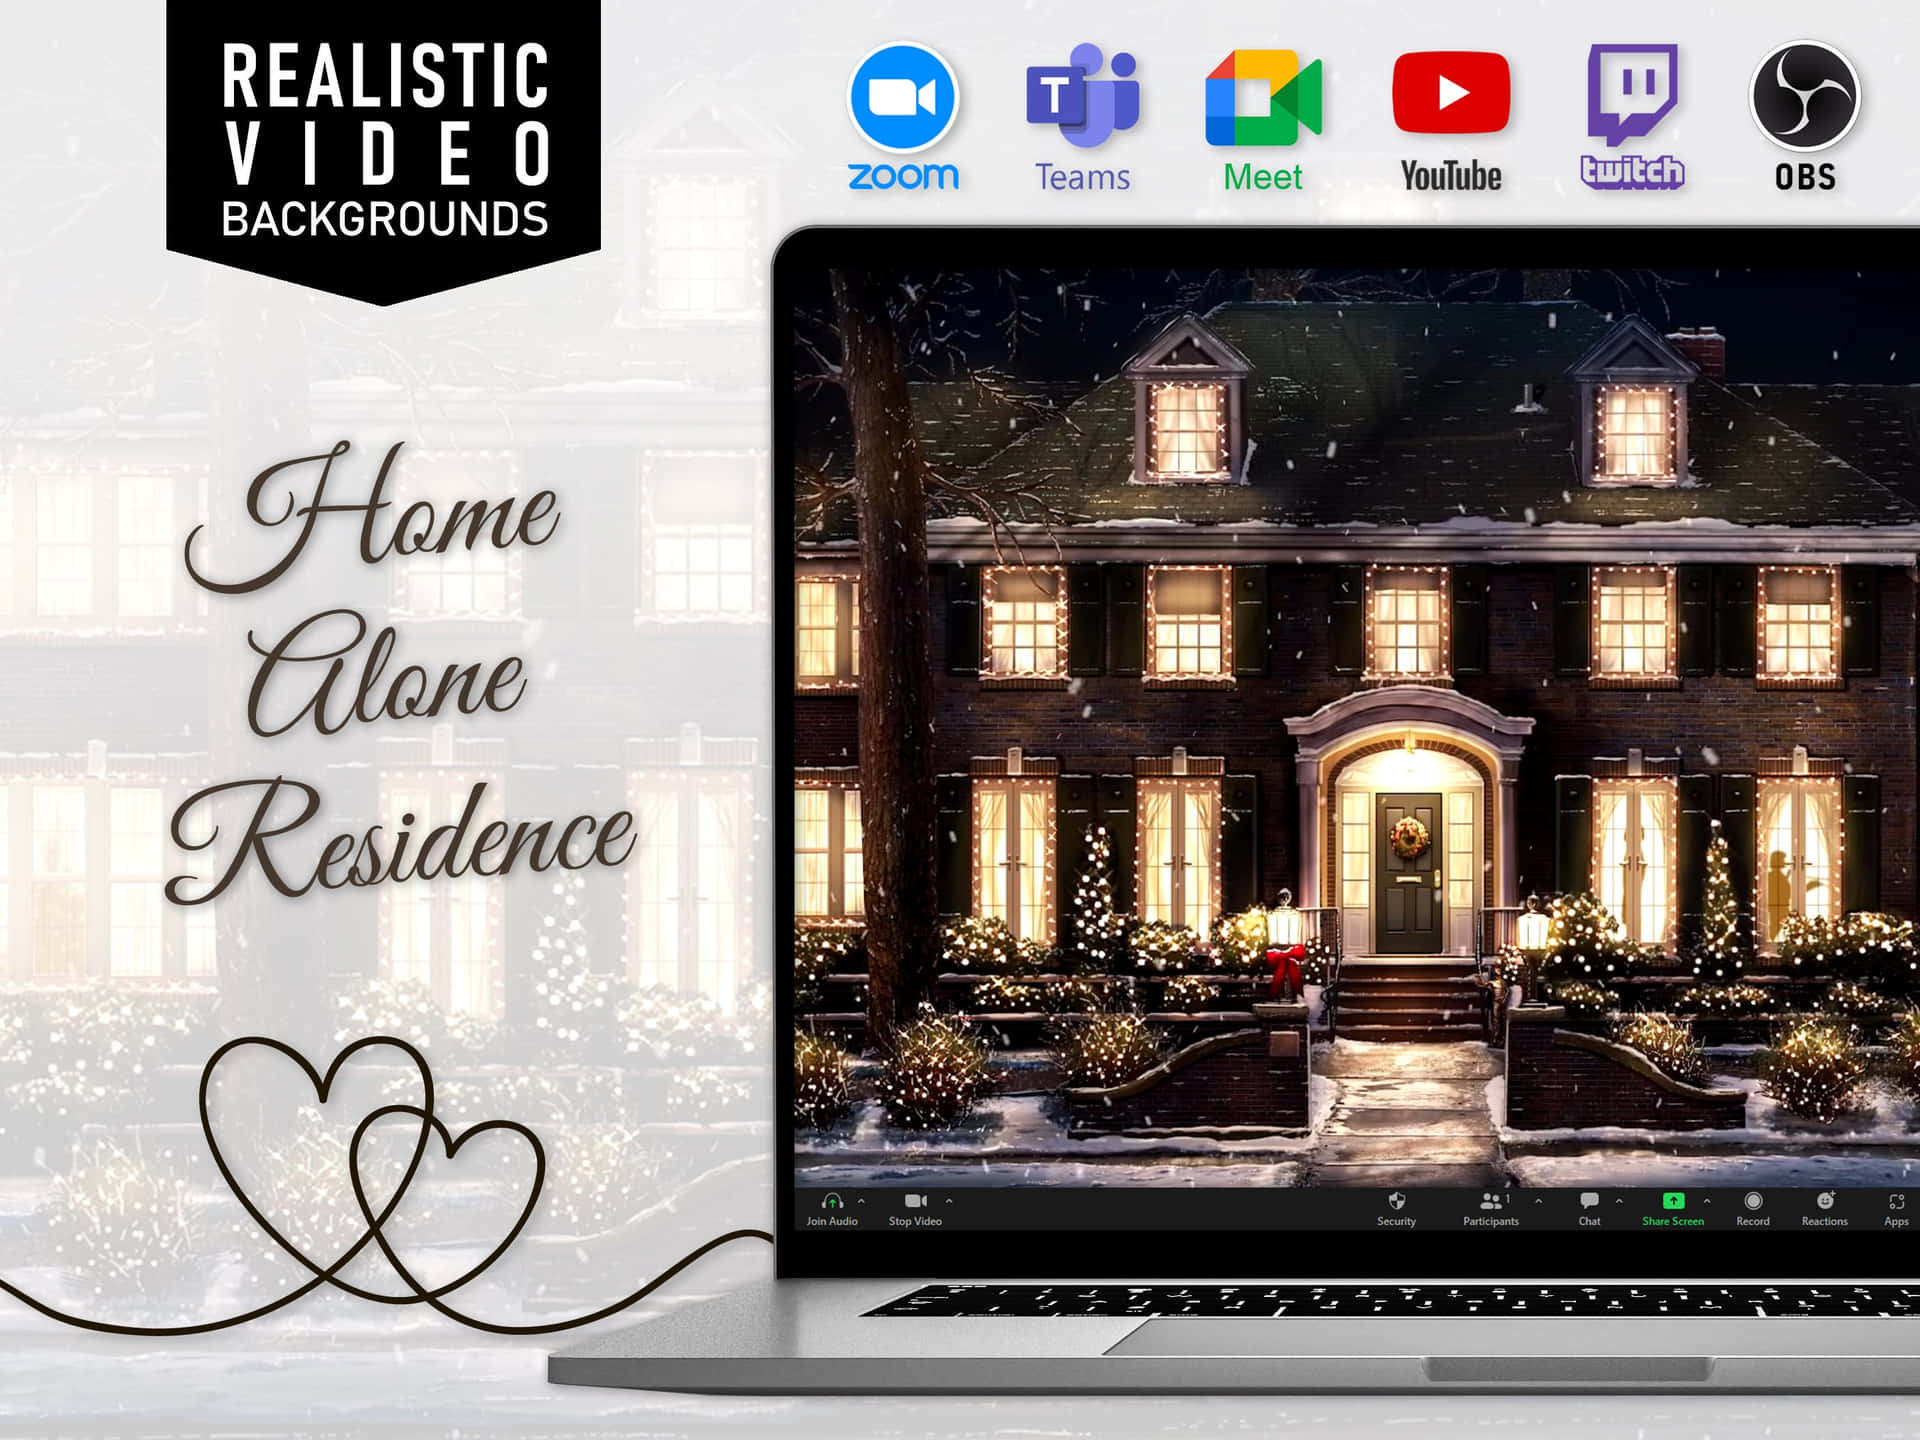 Realistic Video Home Alone Residence Screenshots